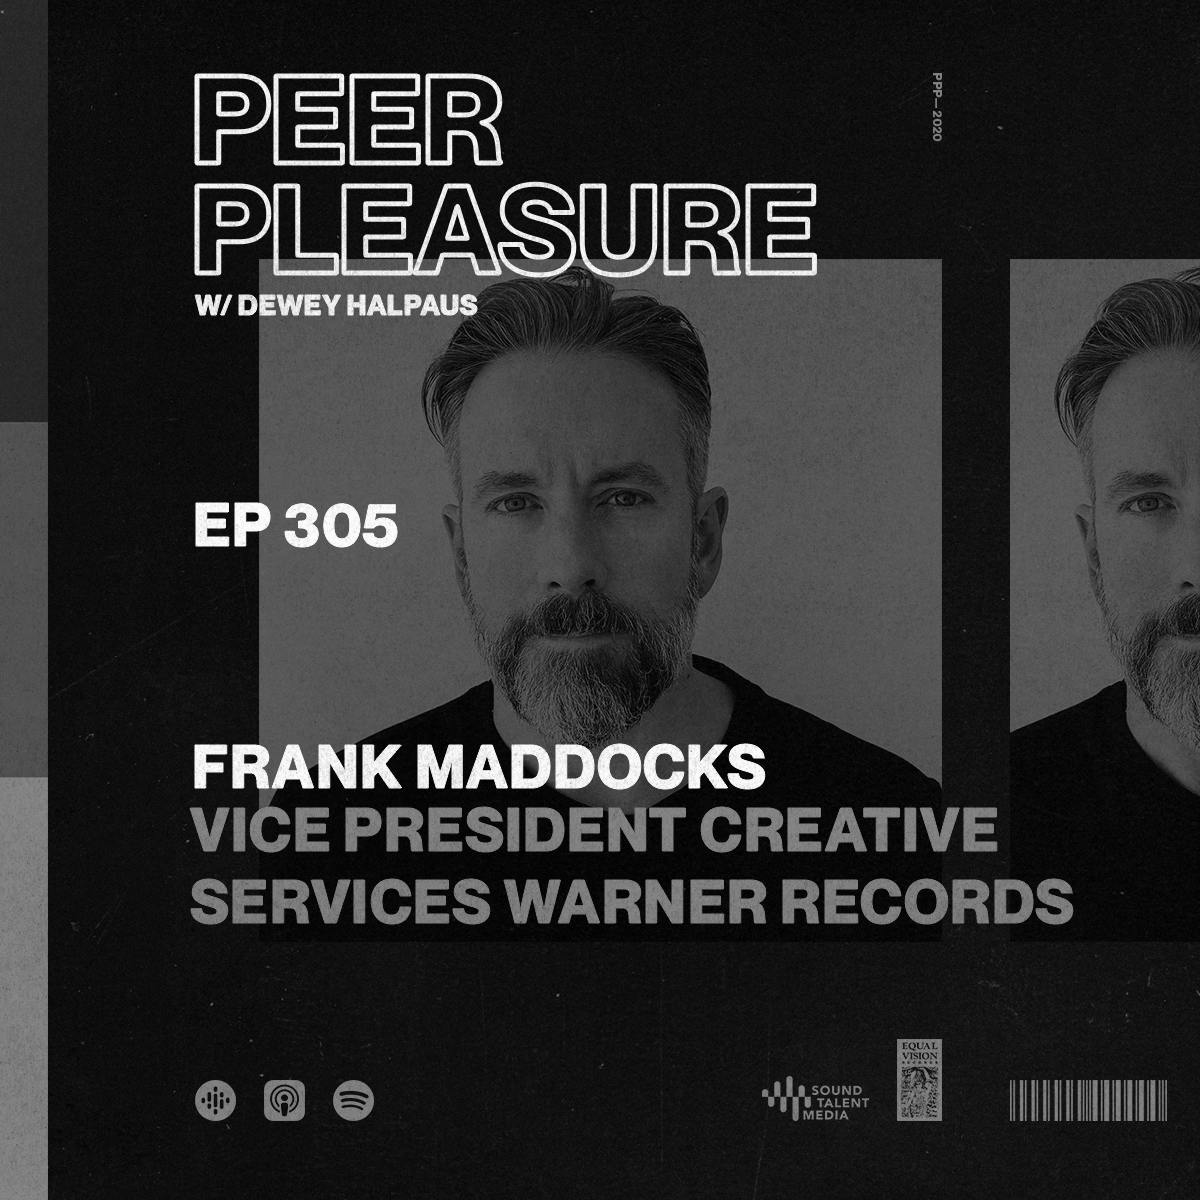 Frank Maddocks (Vice President Creative Services Warner Records)